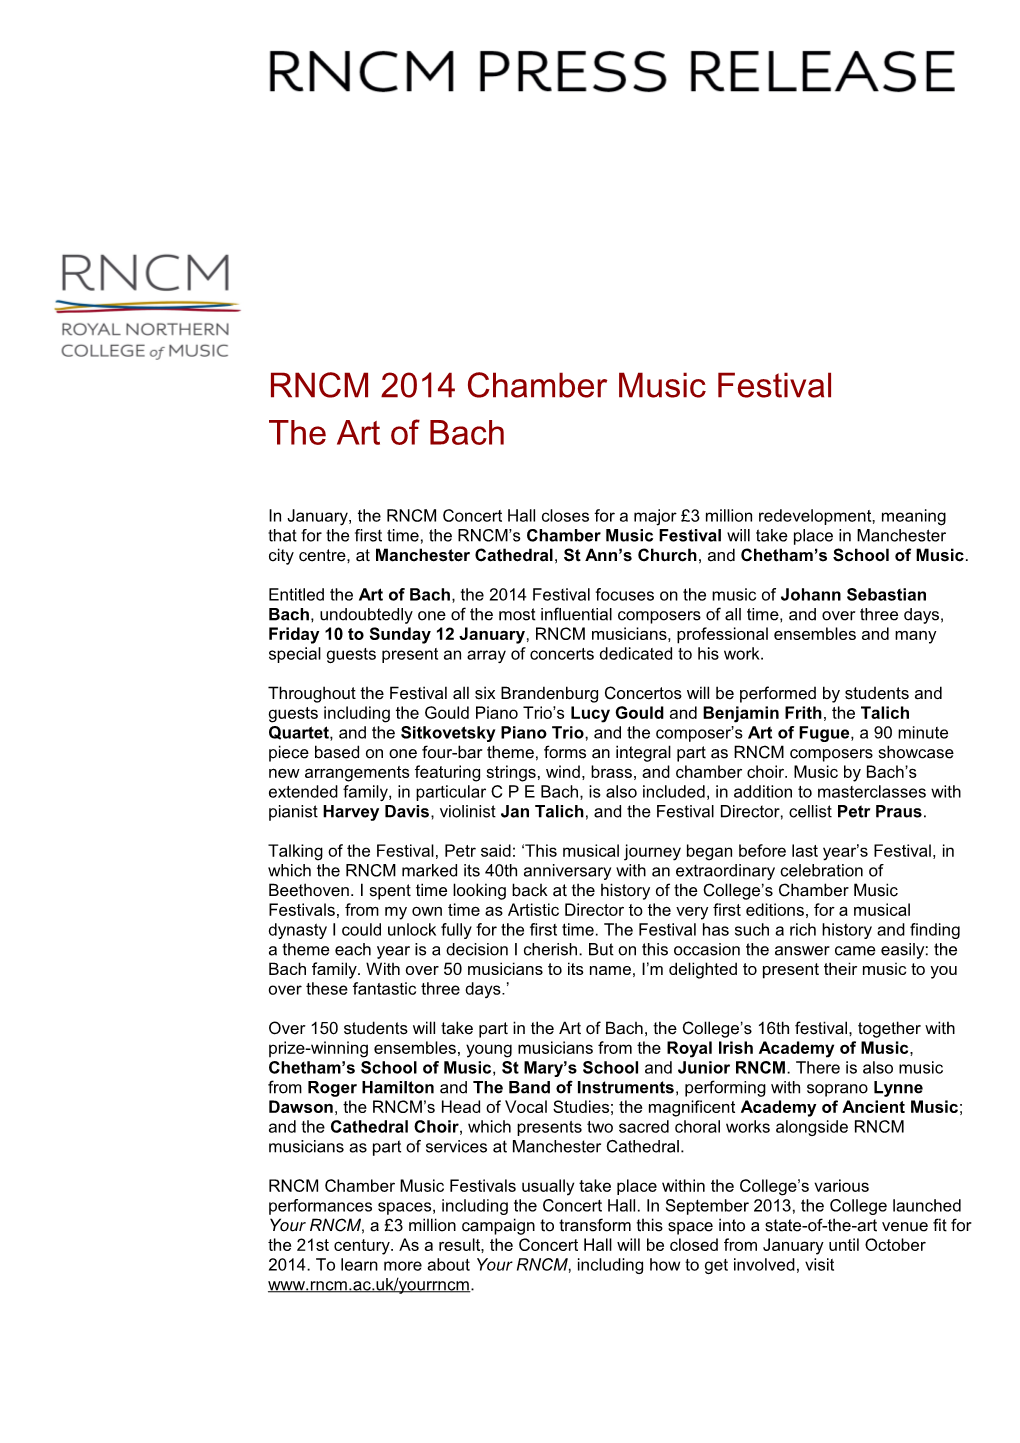 RNCM 2014 Chamber Music Festival the Art of Bach